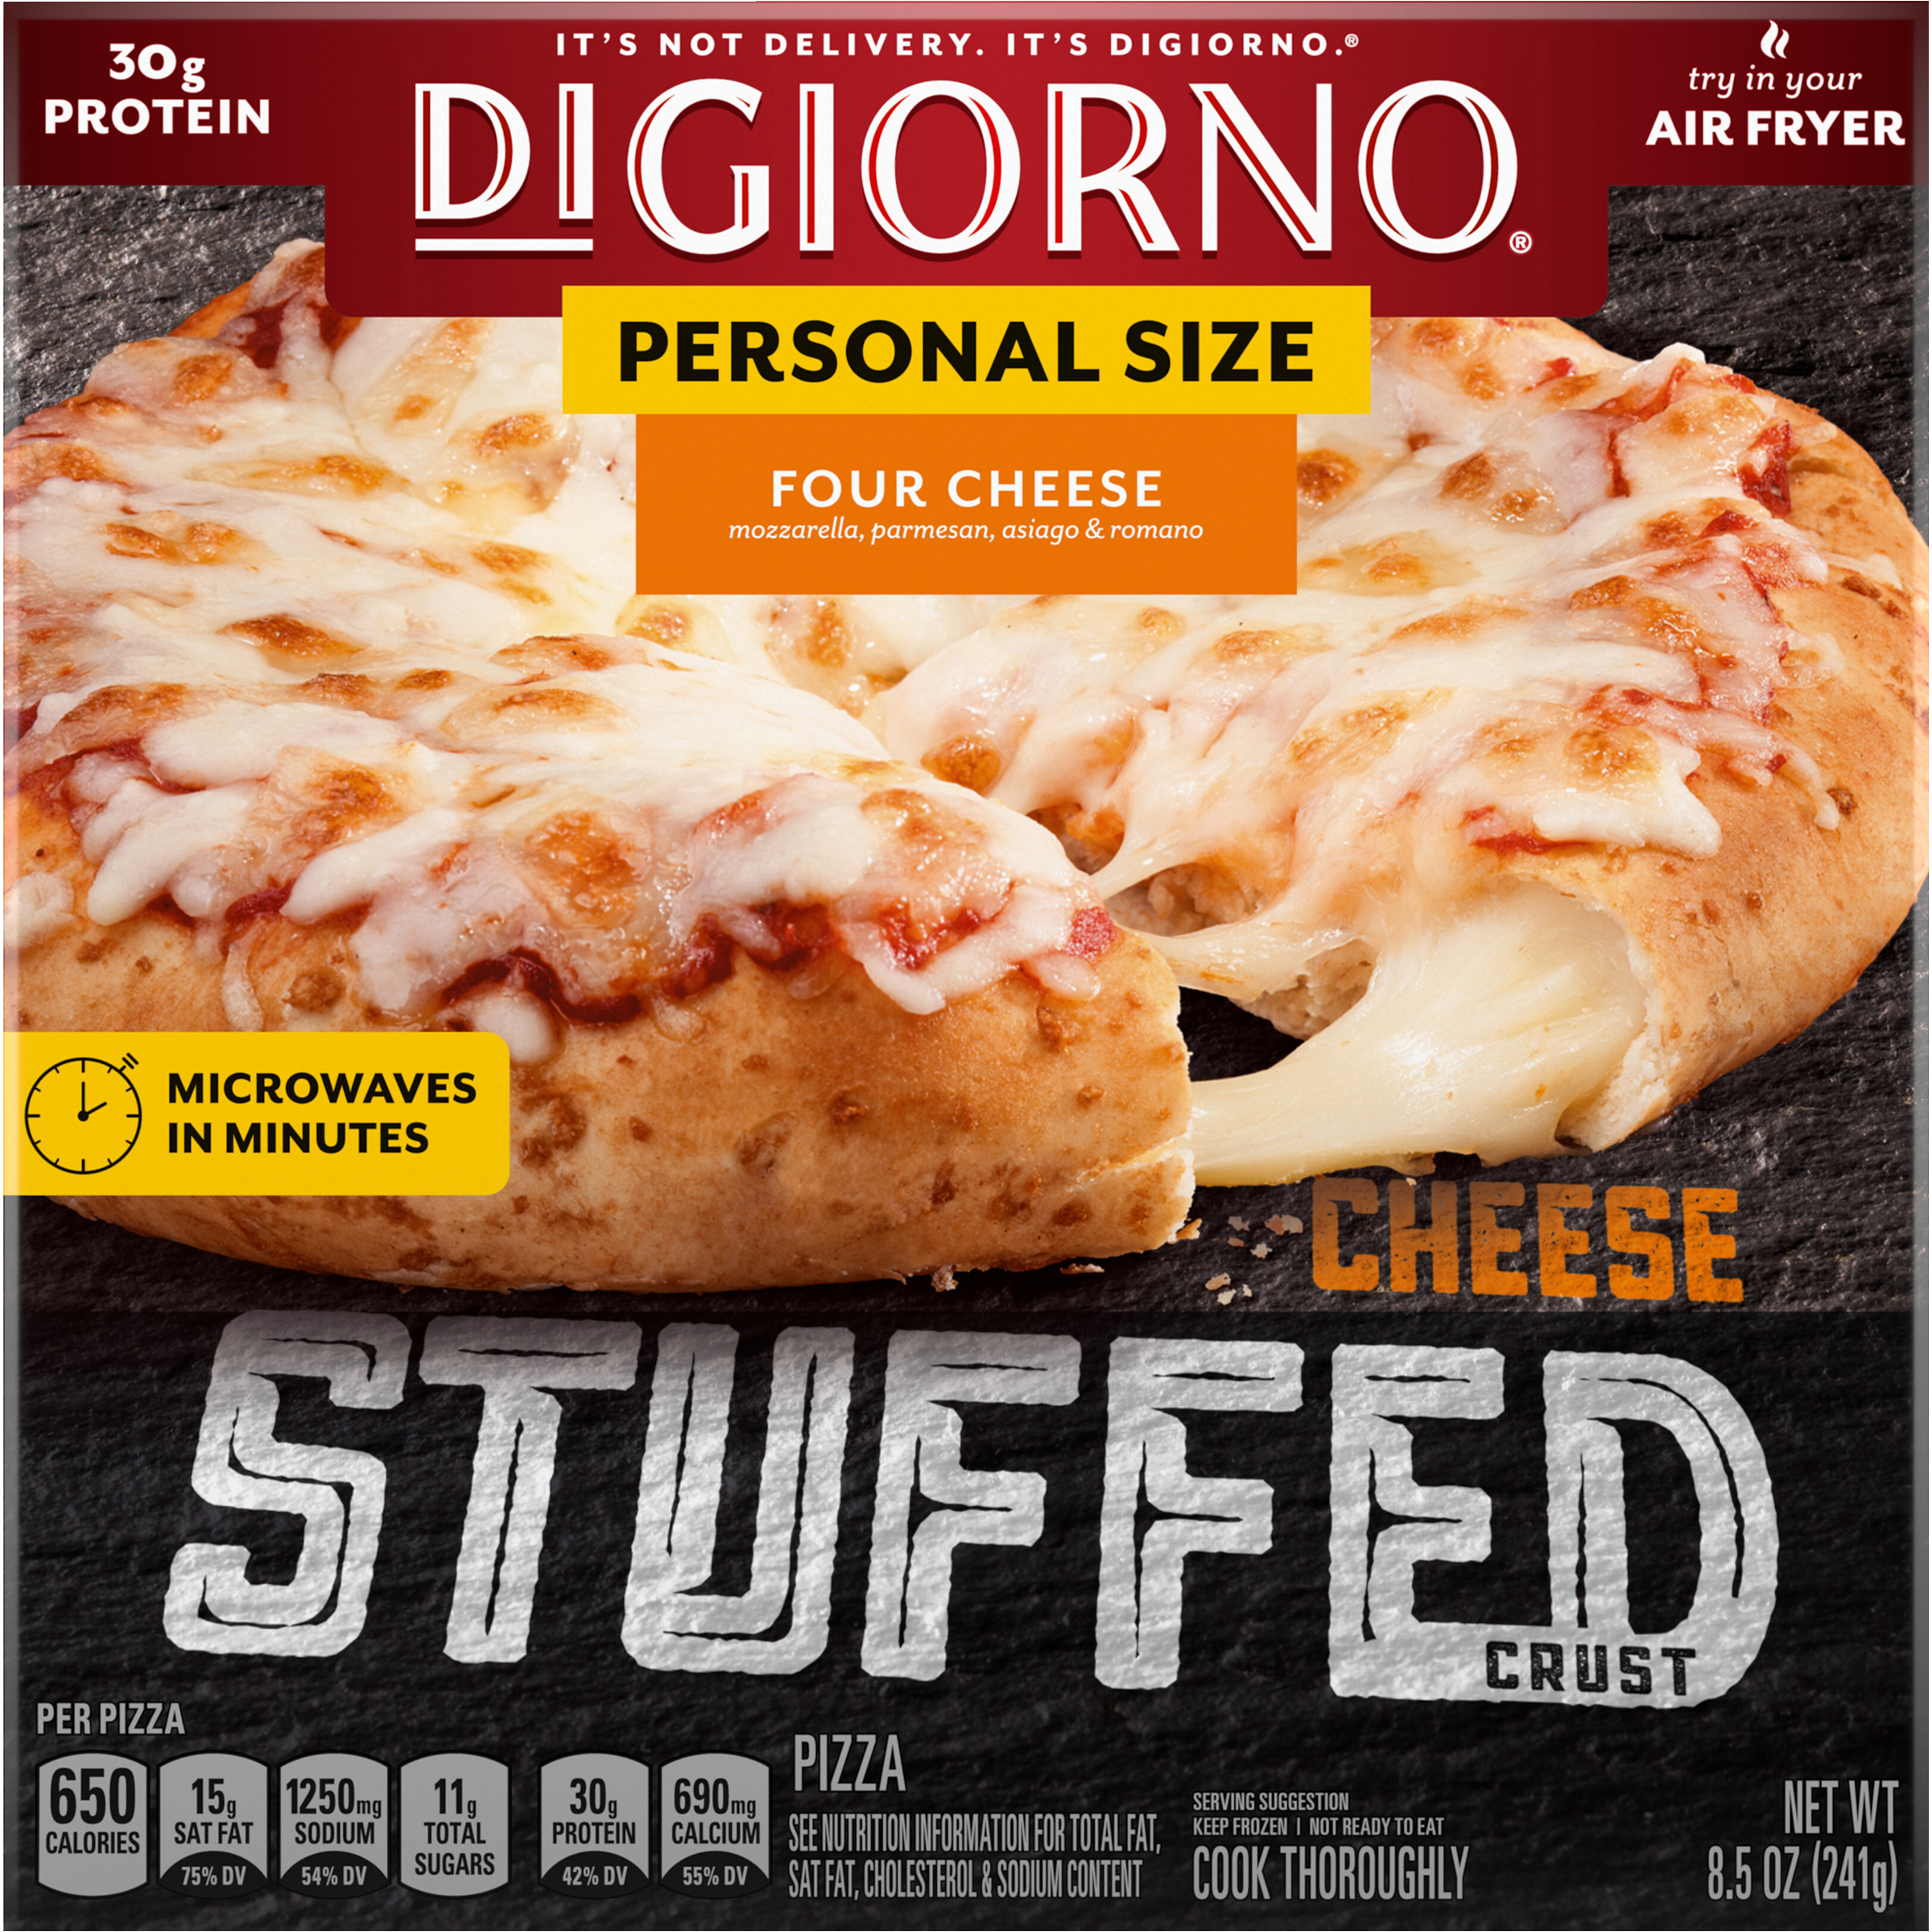 DIGIORNO Cheese Stuffed Crust Four Cheese Personal Size Pizza 10 units per case 8.5 oz